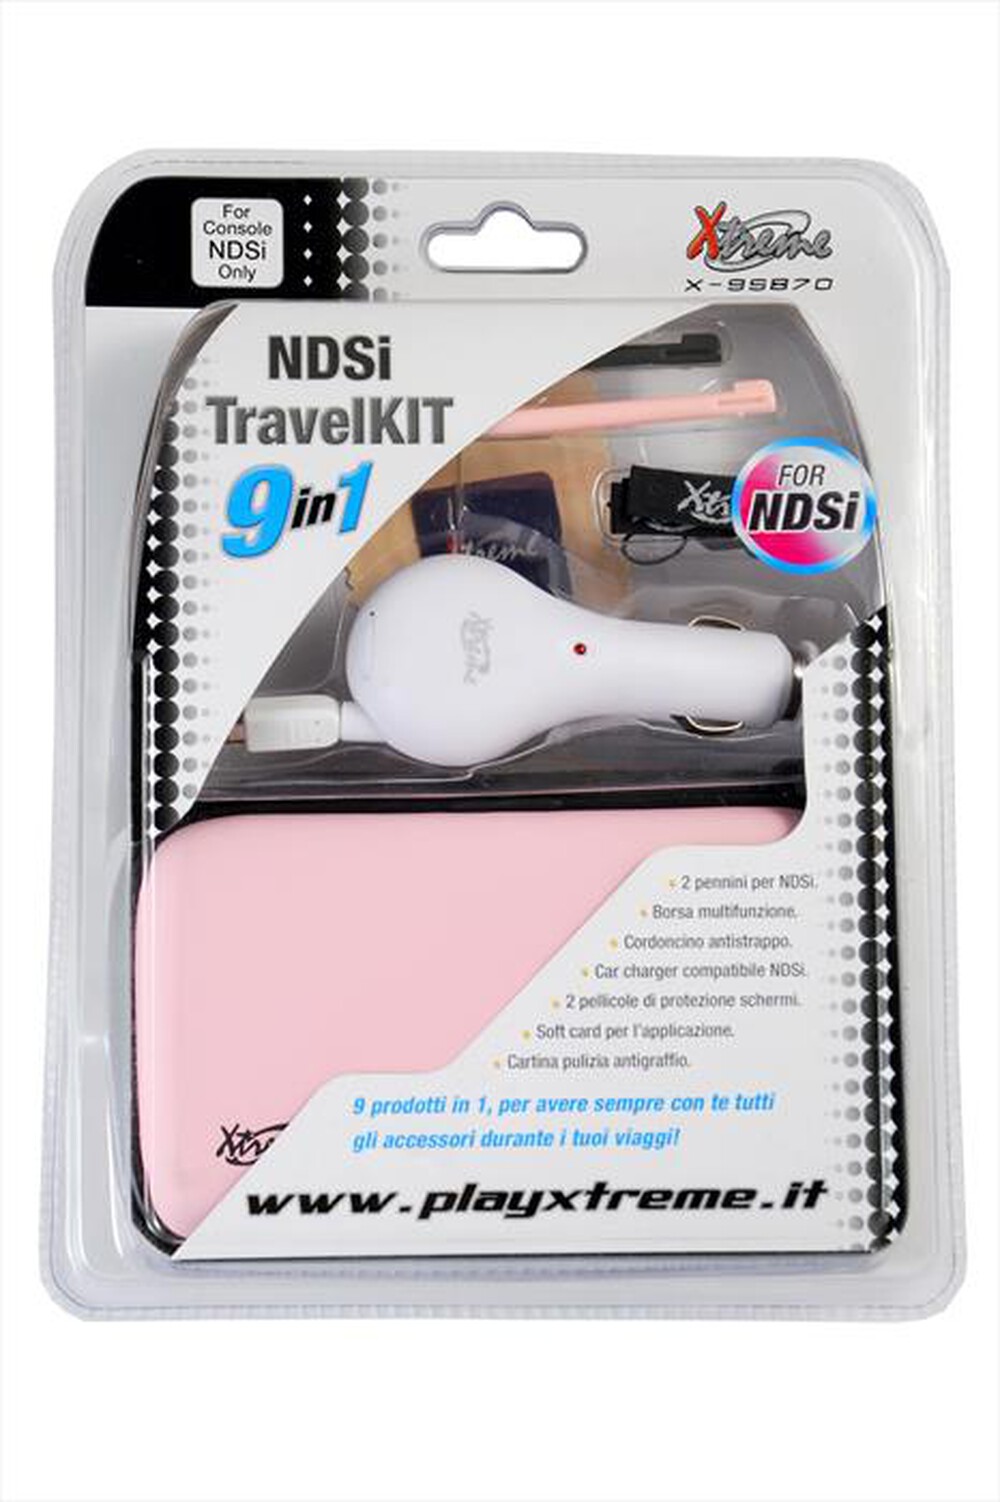 "XTREME - 95870 - Travel Kit 9 in 1 - "